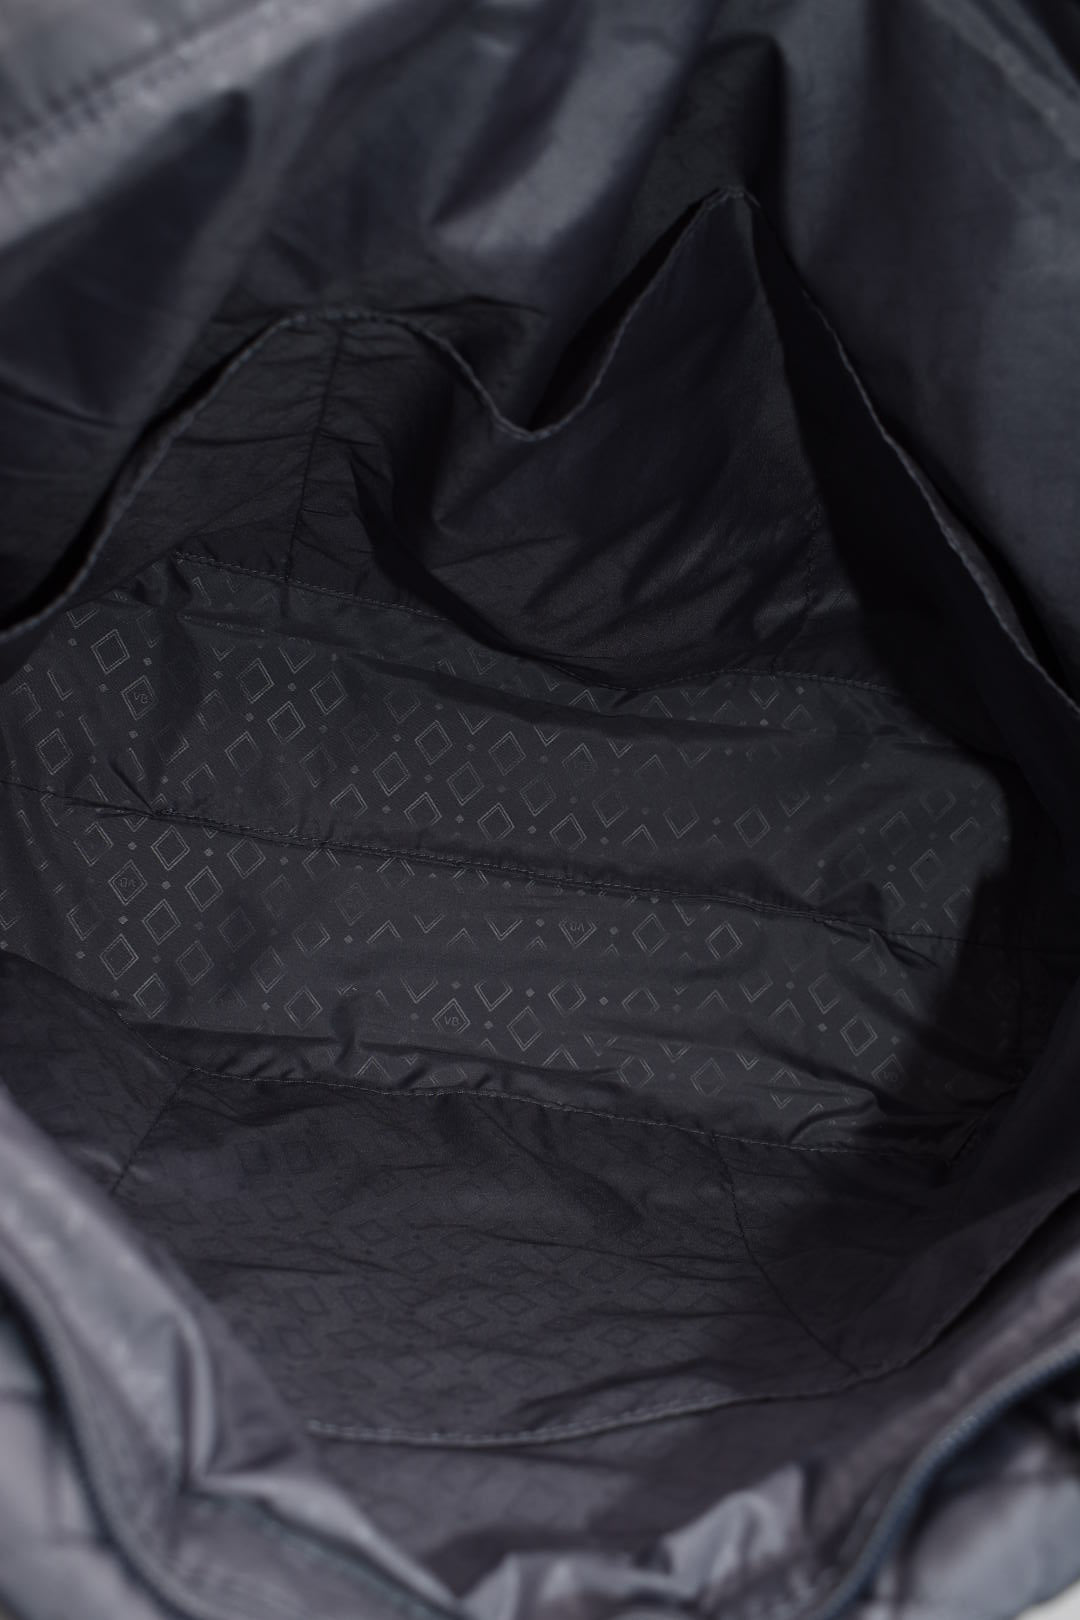 Vera Bradley Microfiber Large Tote Bag in Happy Hydrangeas